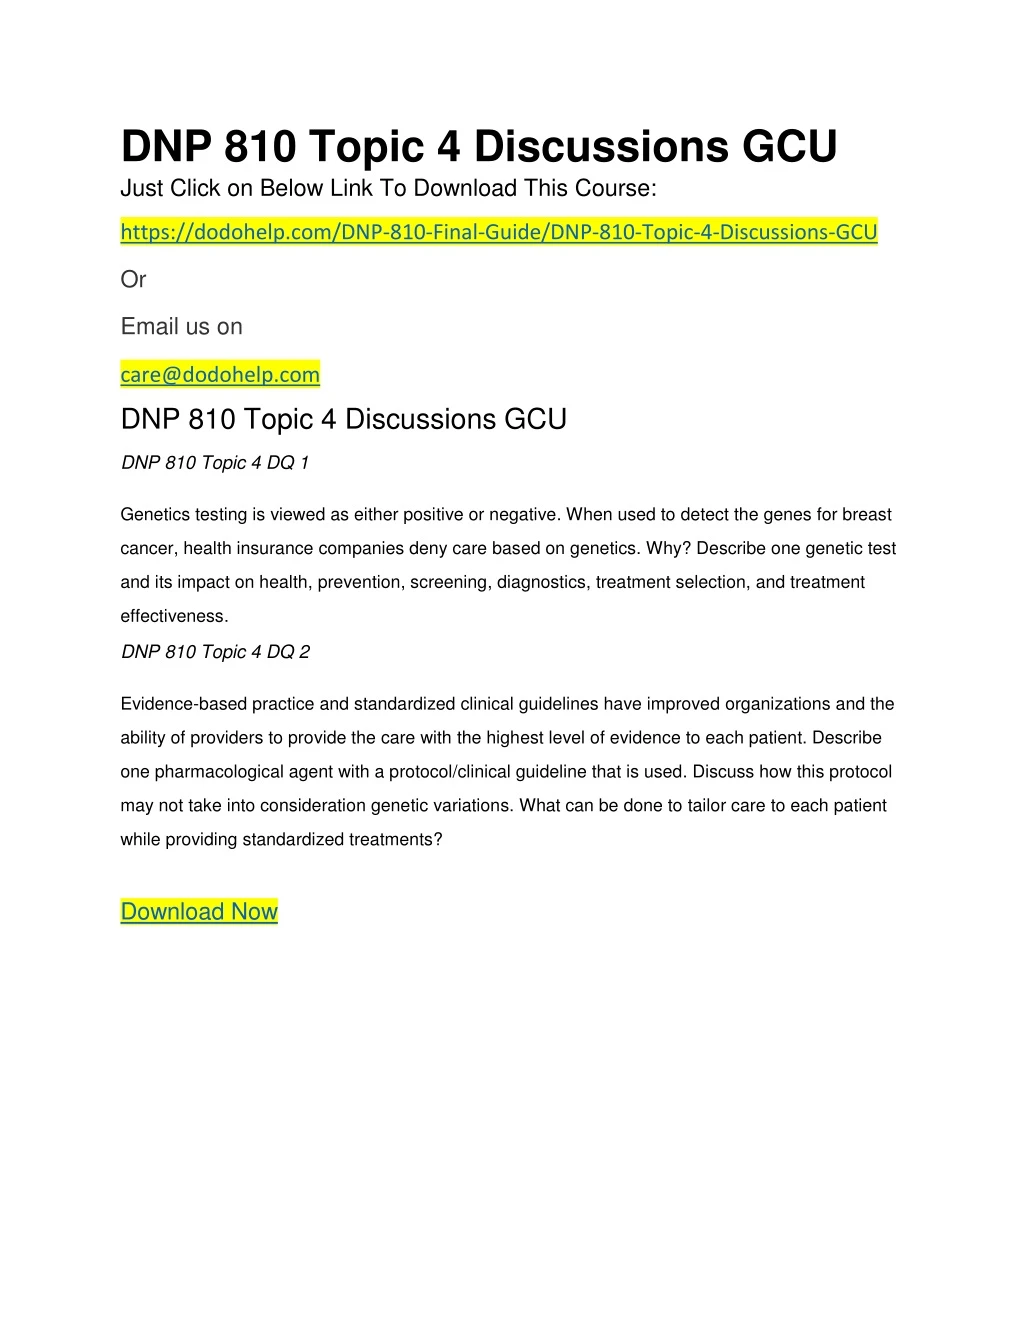 dnp 810 topic 4 discussions gcu just click